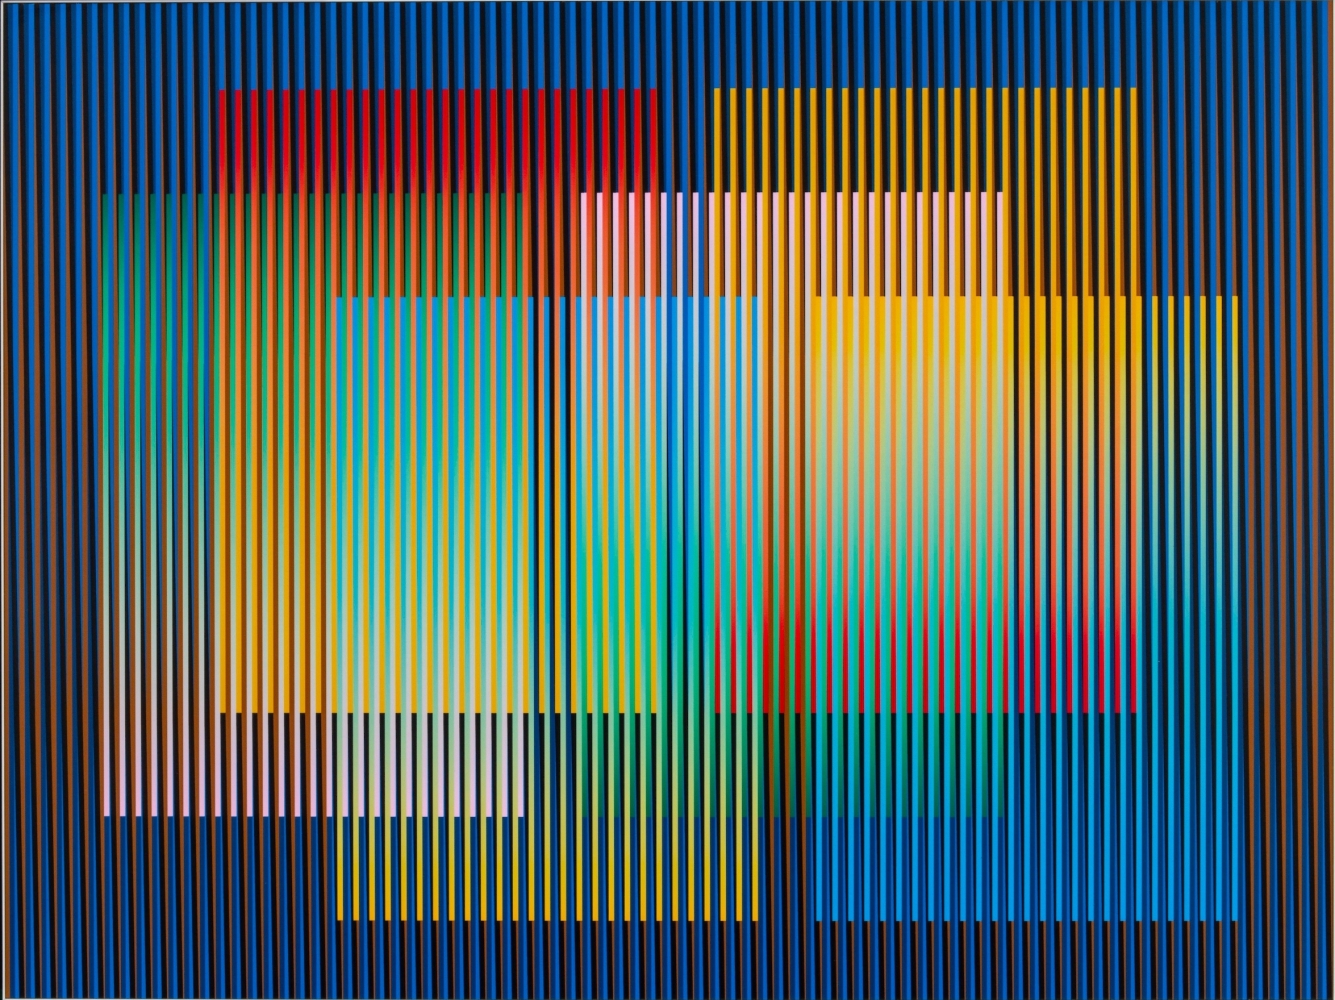 Color Aditivo Panam 8, 2010&amp;nbsp;
Cromografía sobre aluminio
60&amp;nbsp;x 80&amp;nbsp;cm
23 79/127&amp;nbsp;x 31 63/127 in
Edici&amp;oacute;n de 8